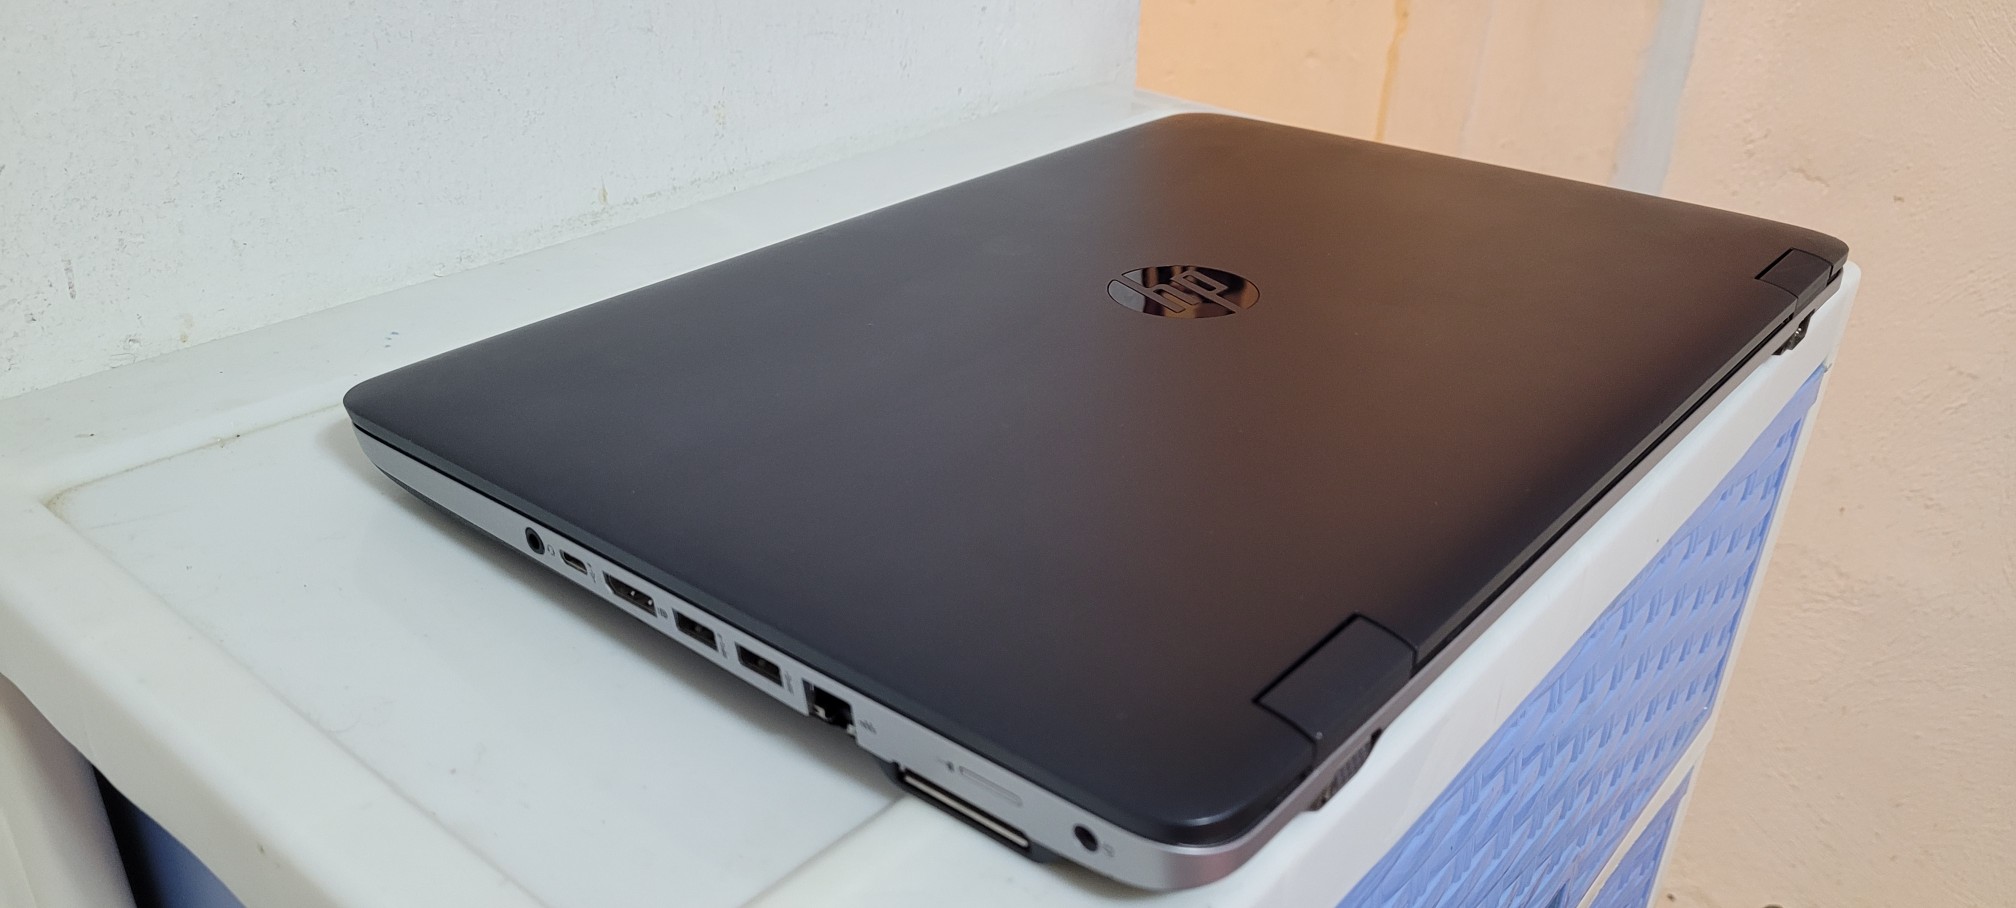 computadoras y laptops - Laptop hp 17 Pulg Core i5 6ta Ram 8gb ddr4 Disco 256gb SSD 1080p 2